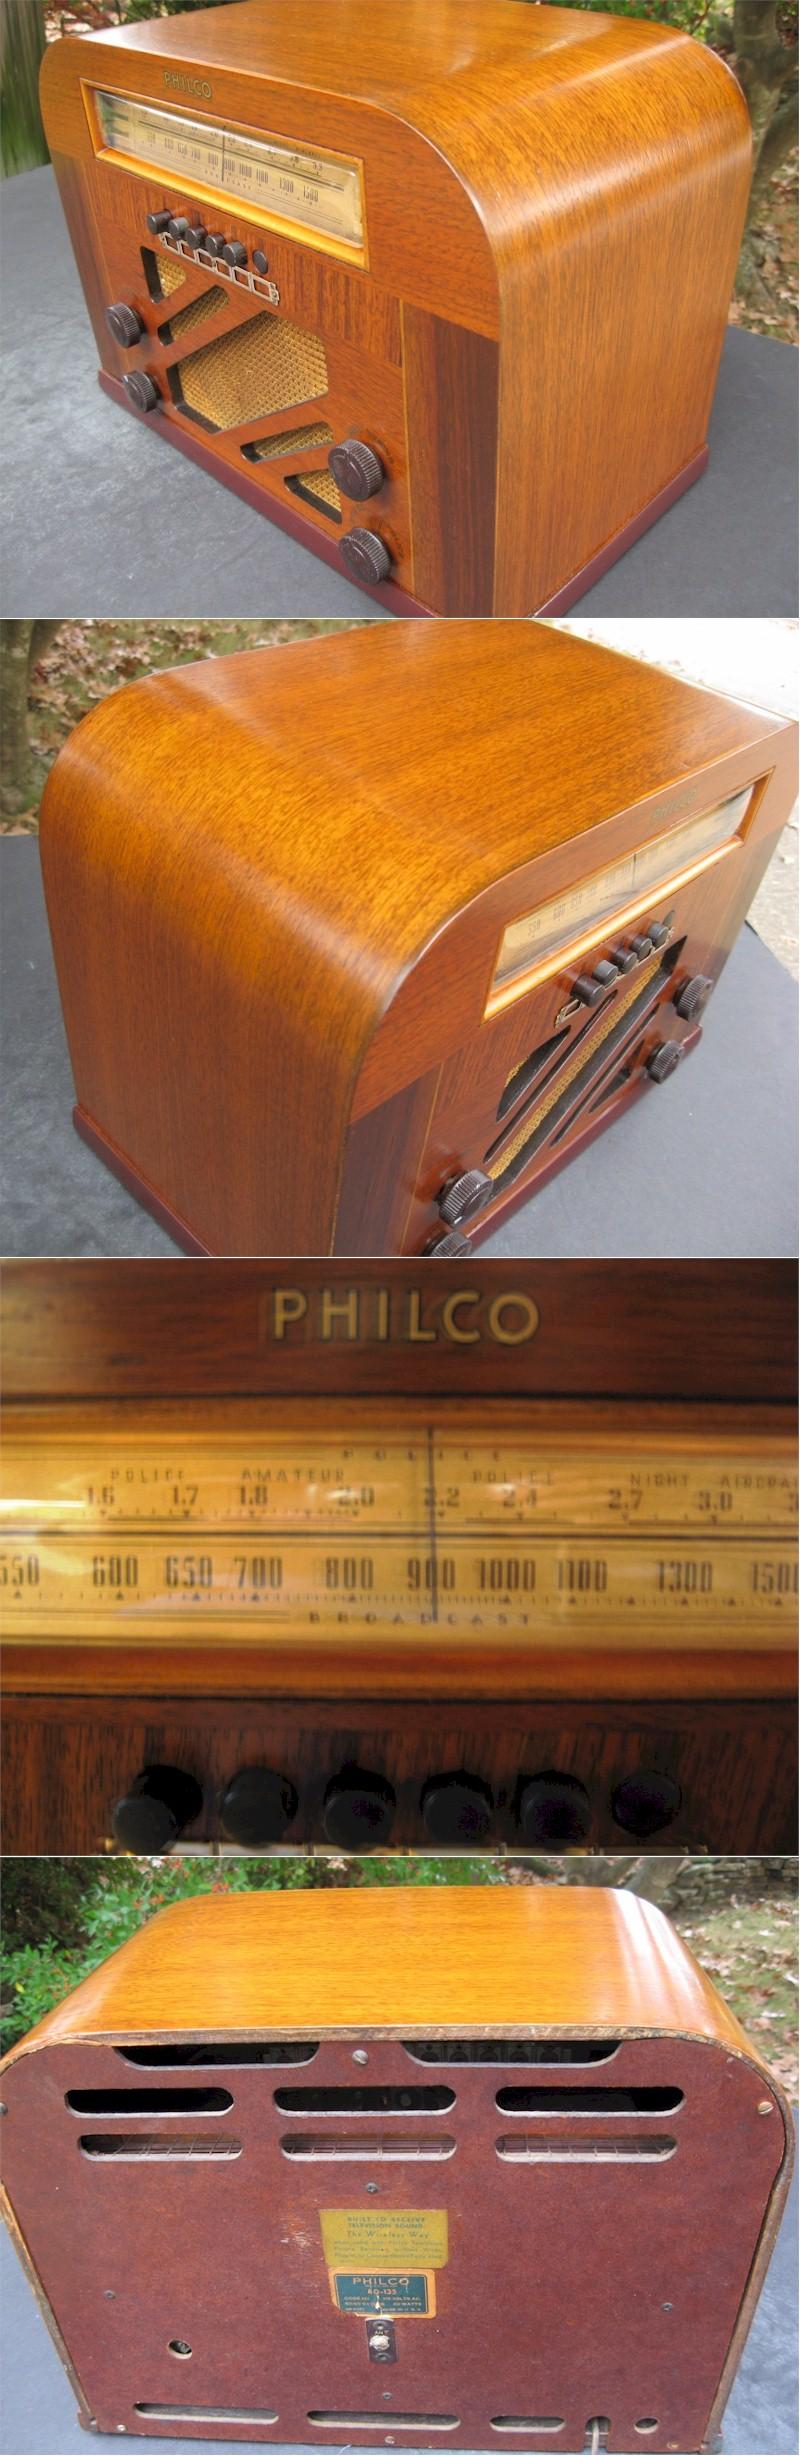 Philco 40-135 (1940)